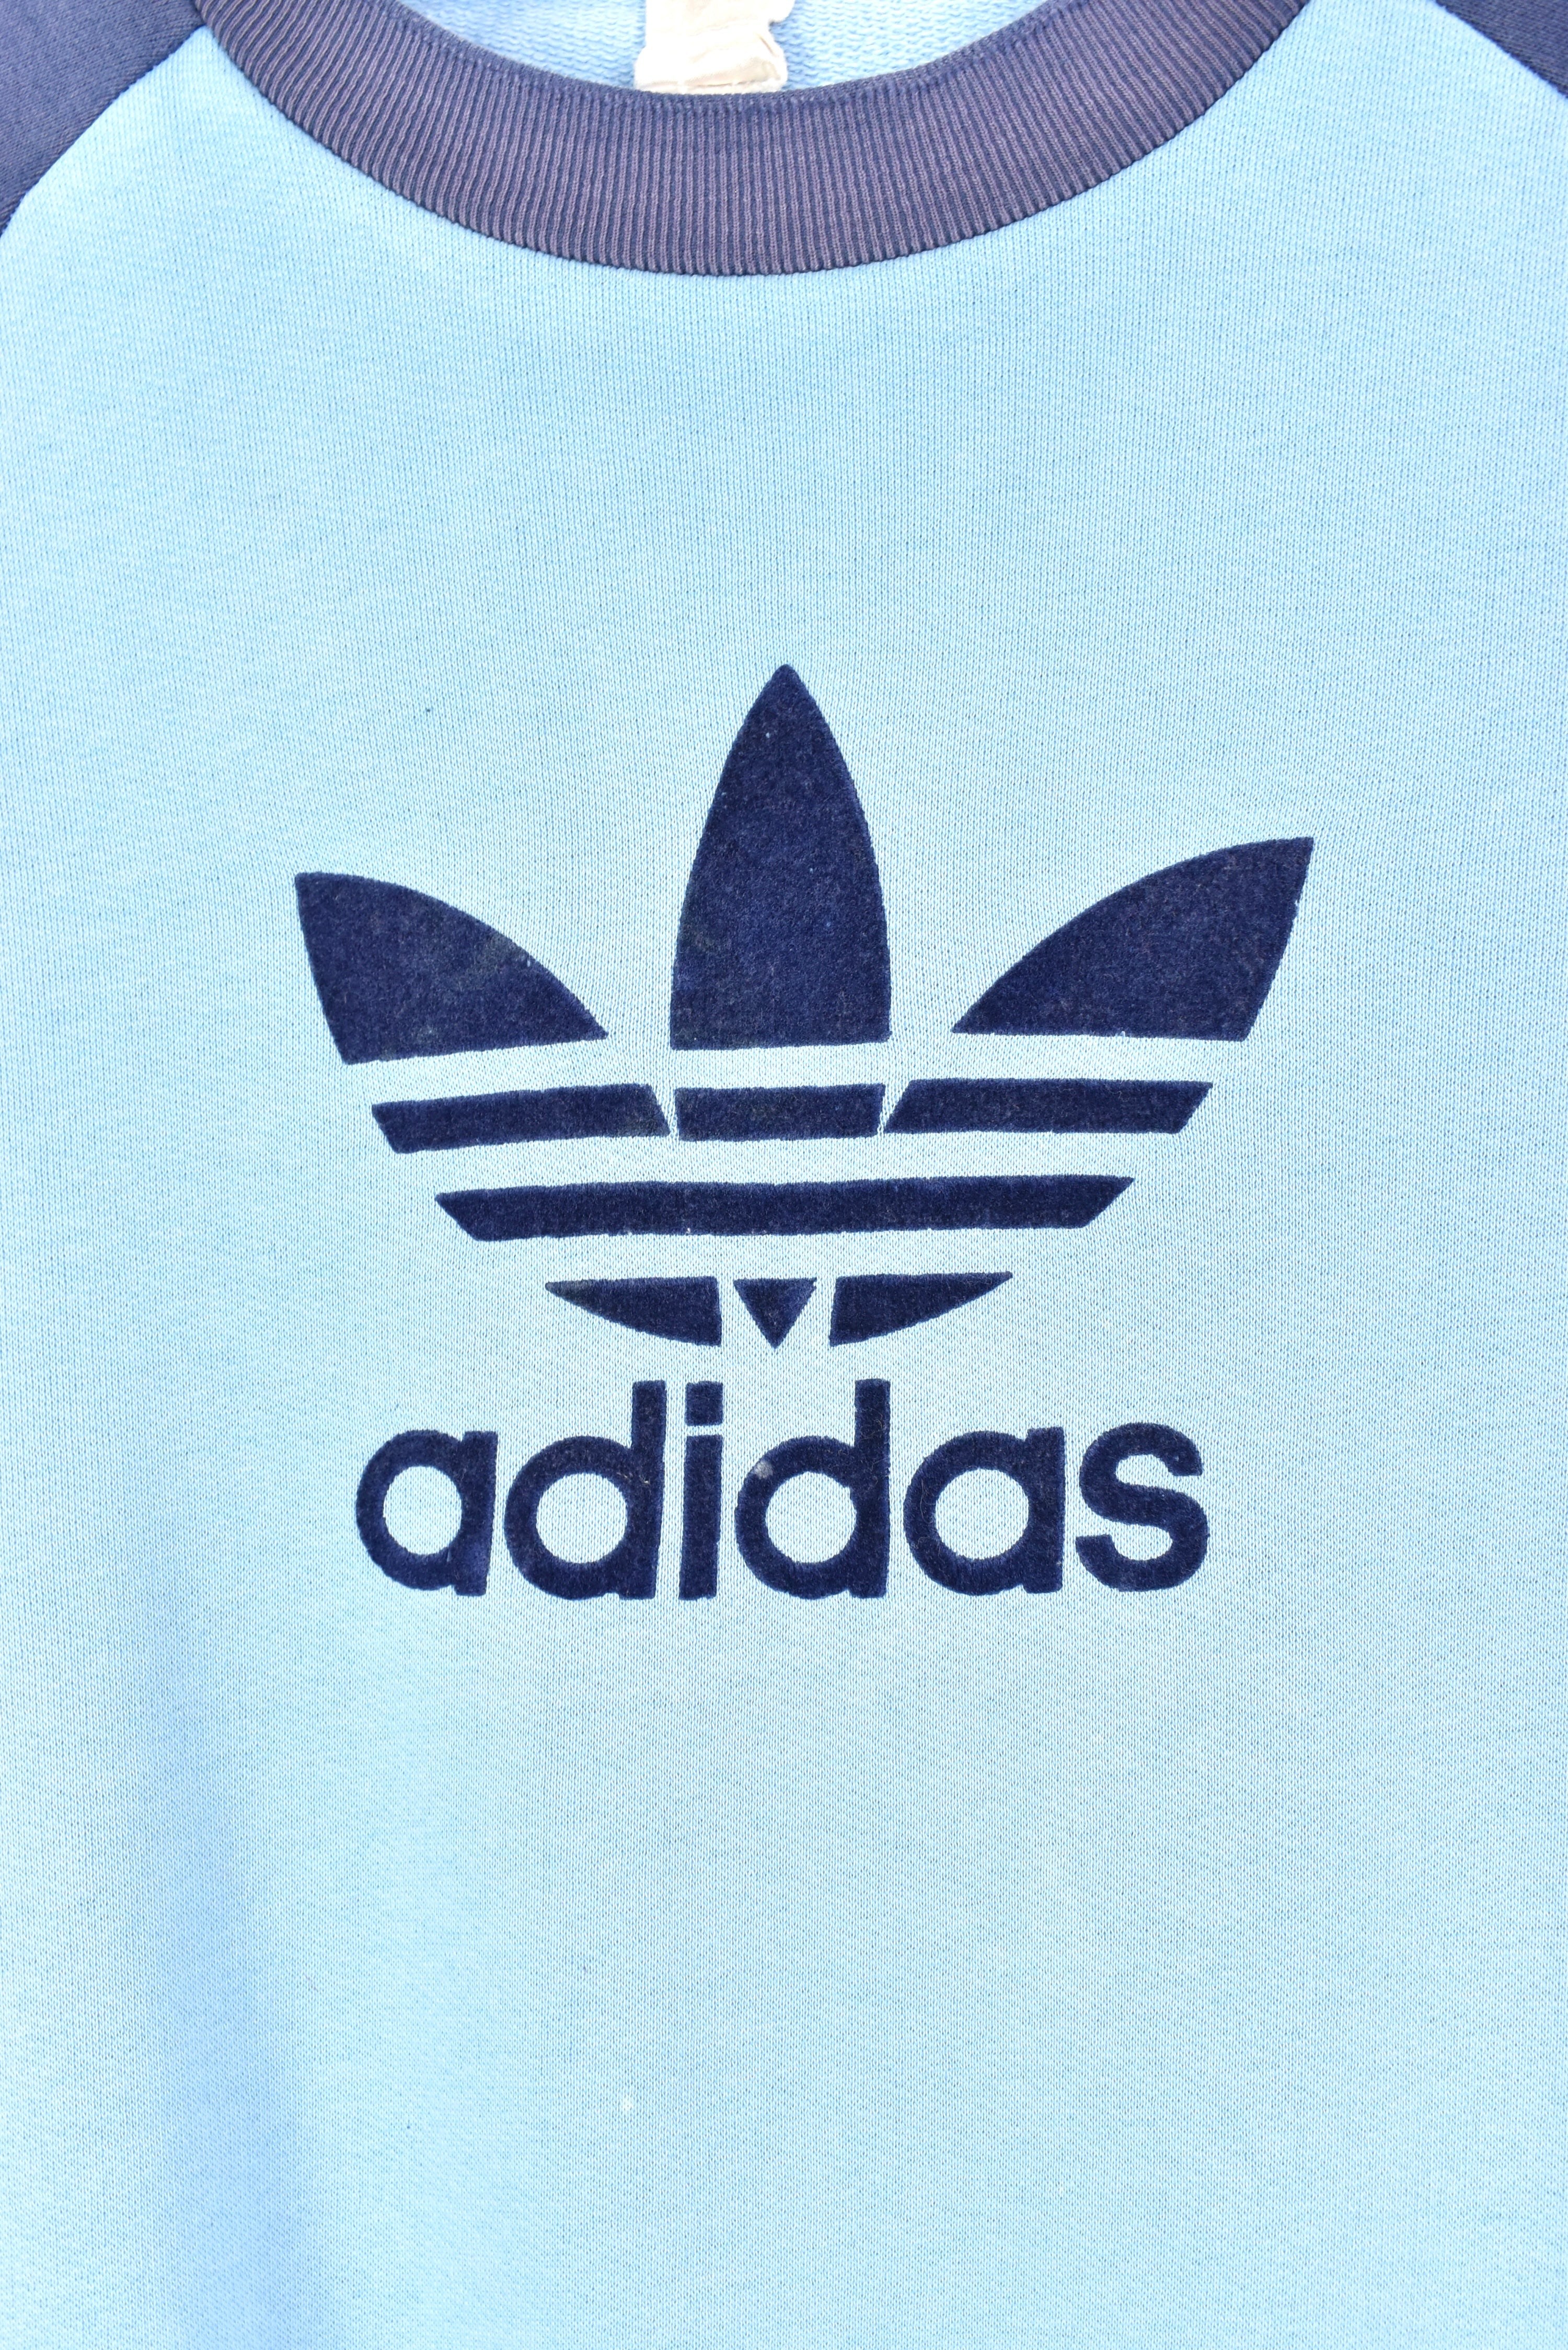 Vintage Adidas sweatshirt, blue graphic crewneck - AU Large ADIDAS